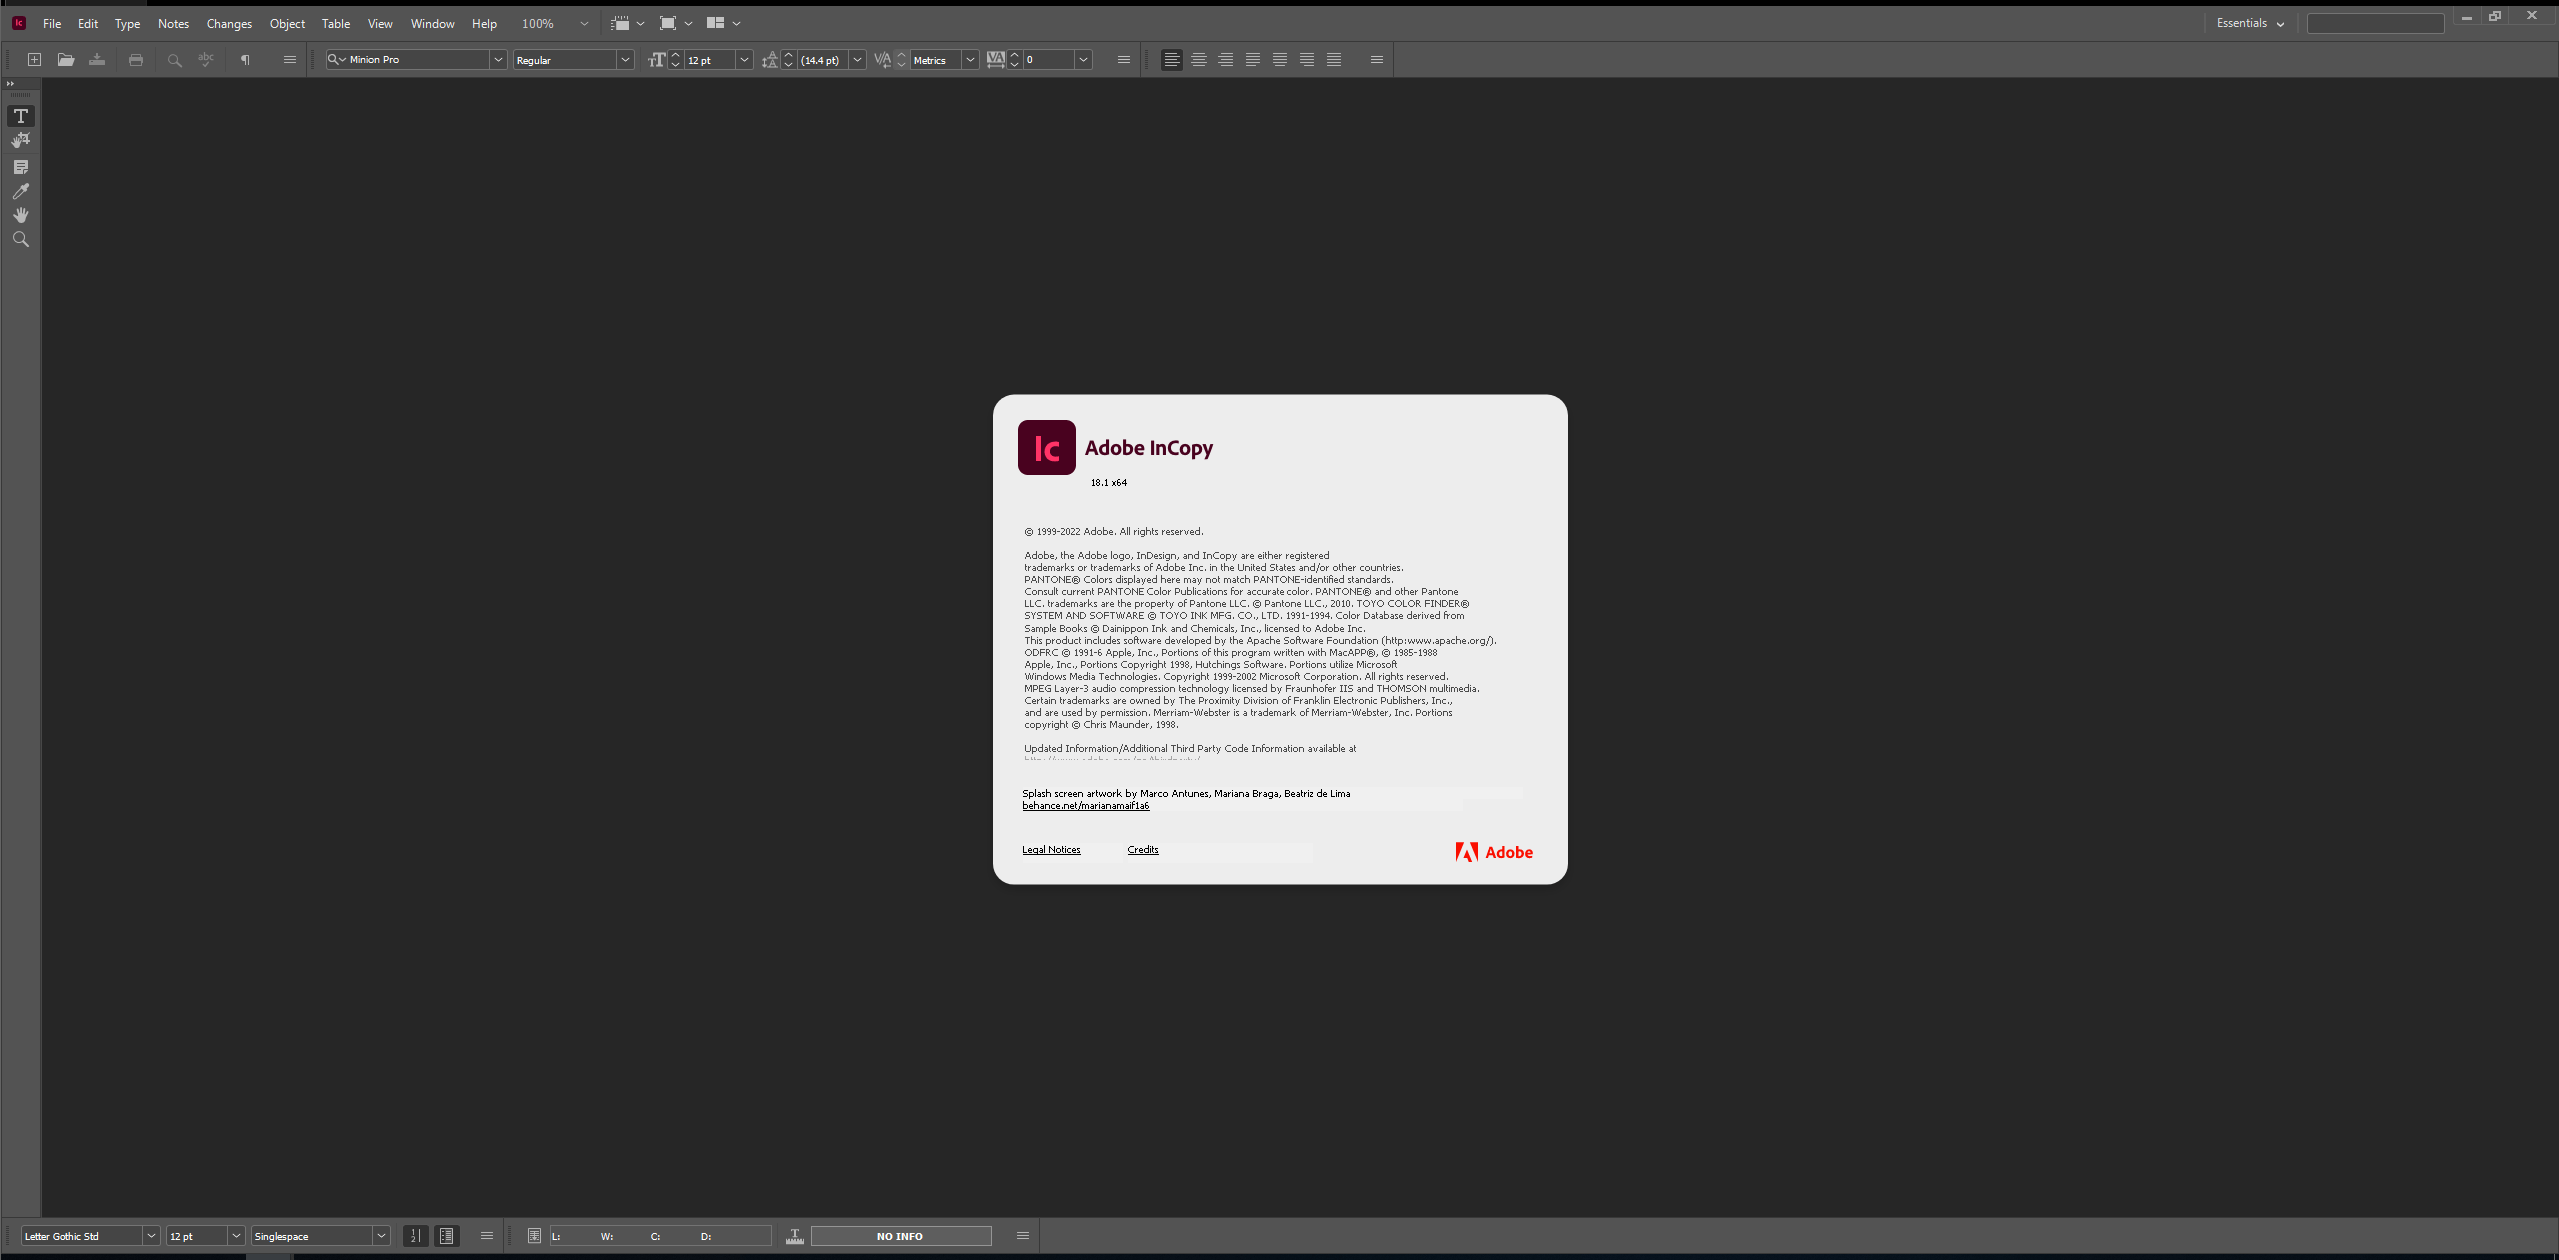 Adobe InCopy 2023 v18.4.0.56 free downloads